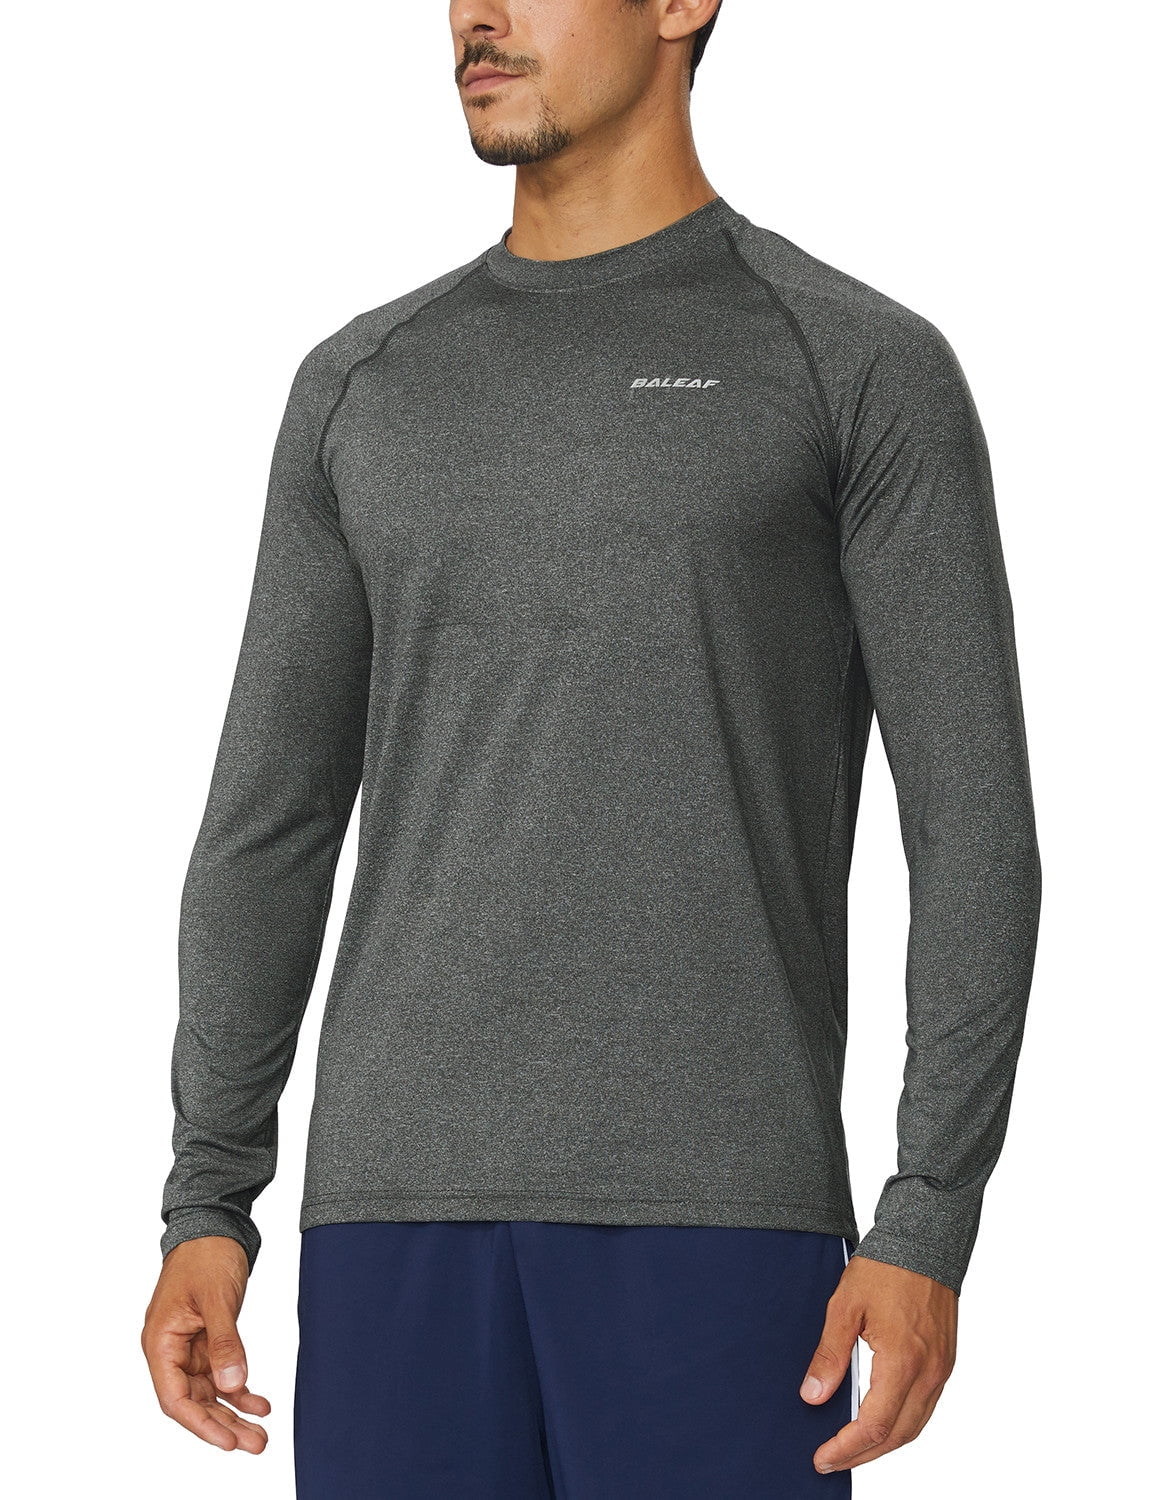 BALEAF Men's Long Sleeve Running Shirts Athletic Workout UPF 50+